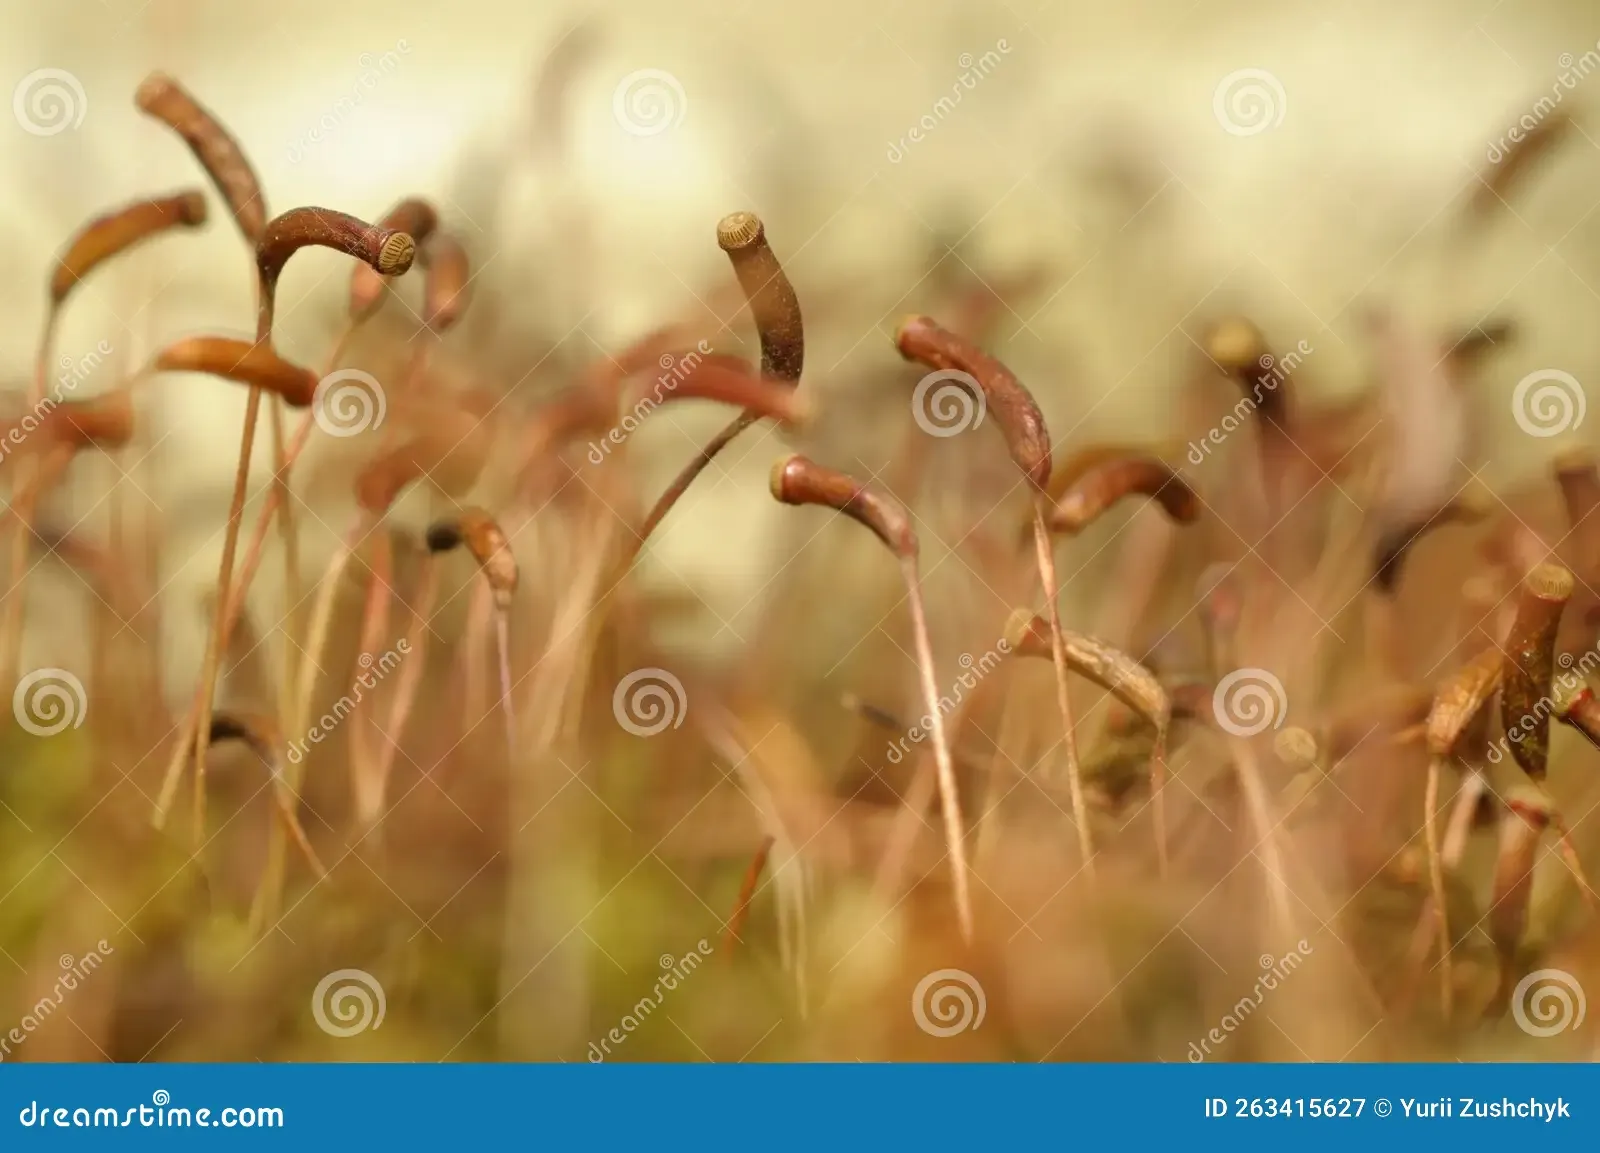 moss-aulacomnium-androgynum-seeds-growing-ground-263415627.jpg